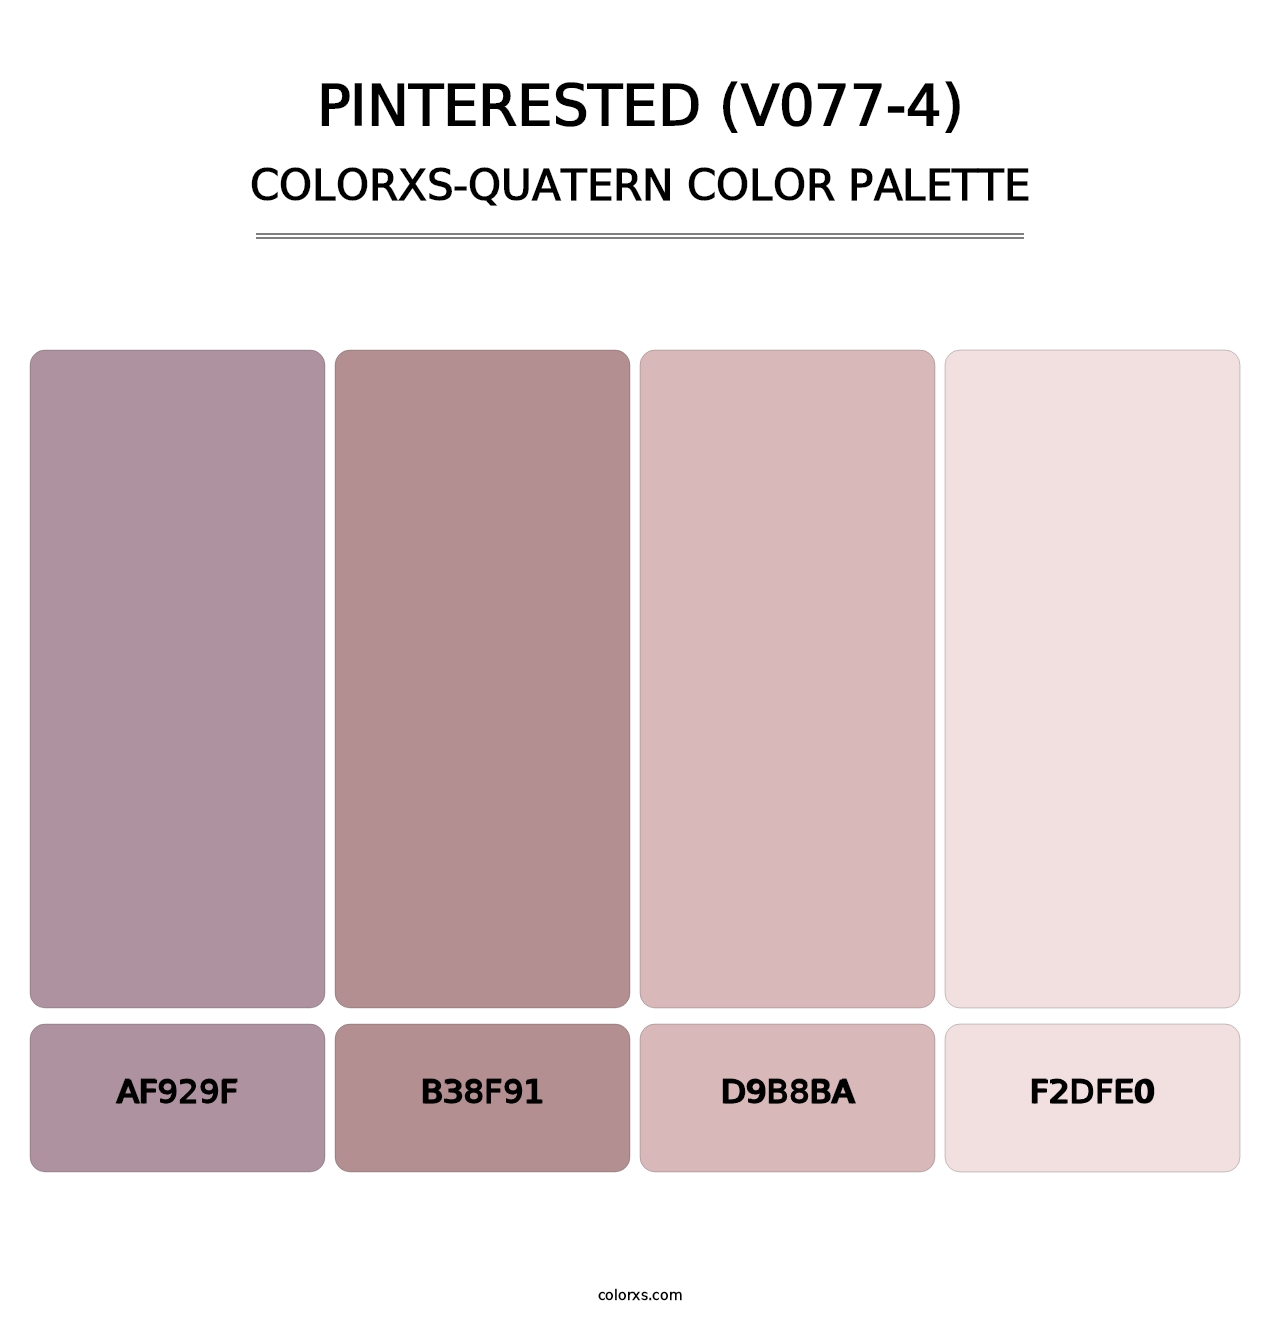 Pinterested (V077-4) - Colorxs Quatern Palette